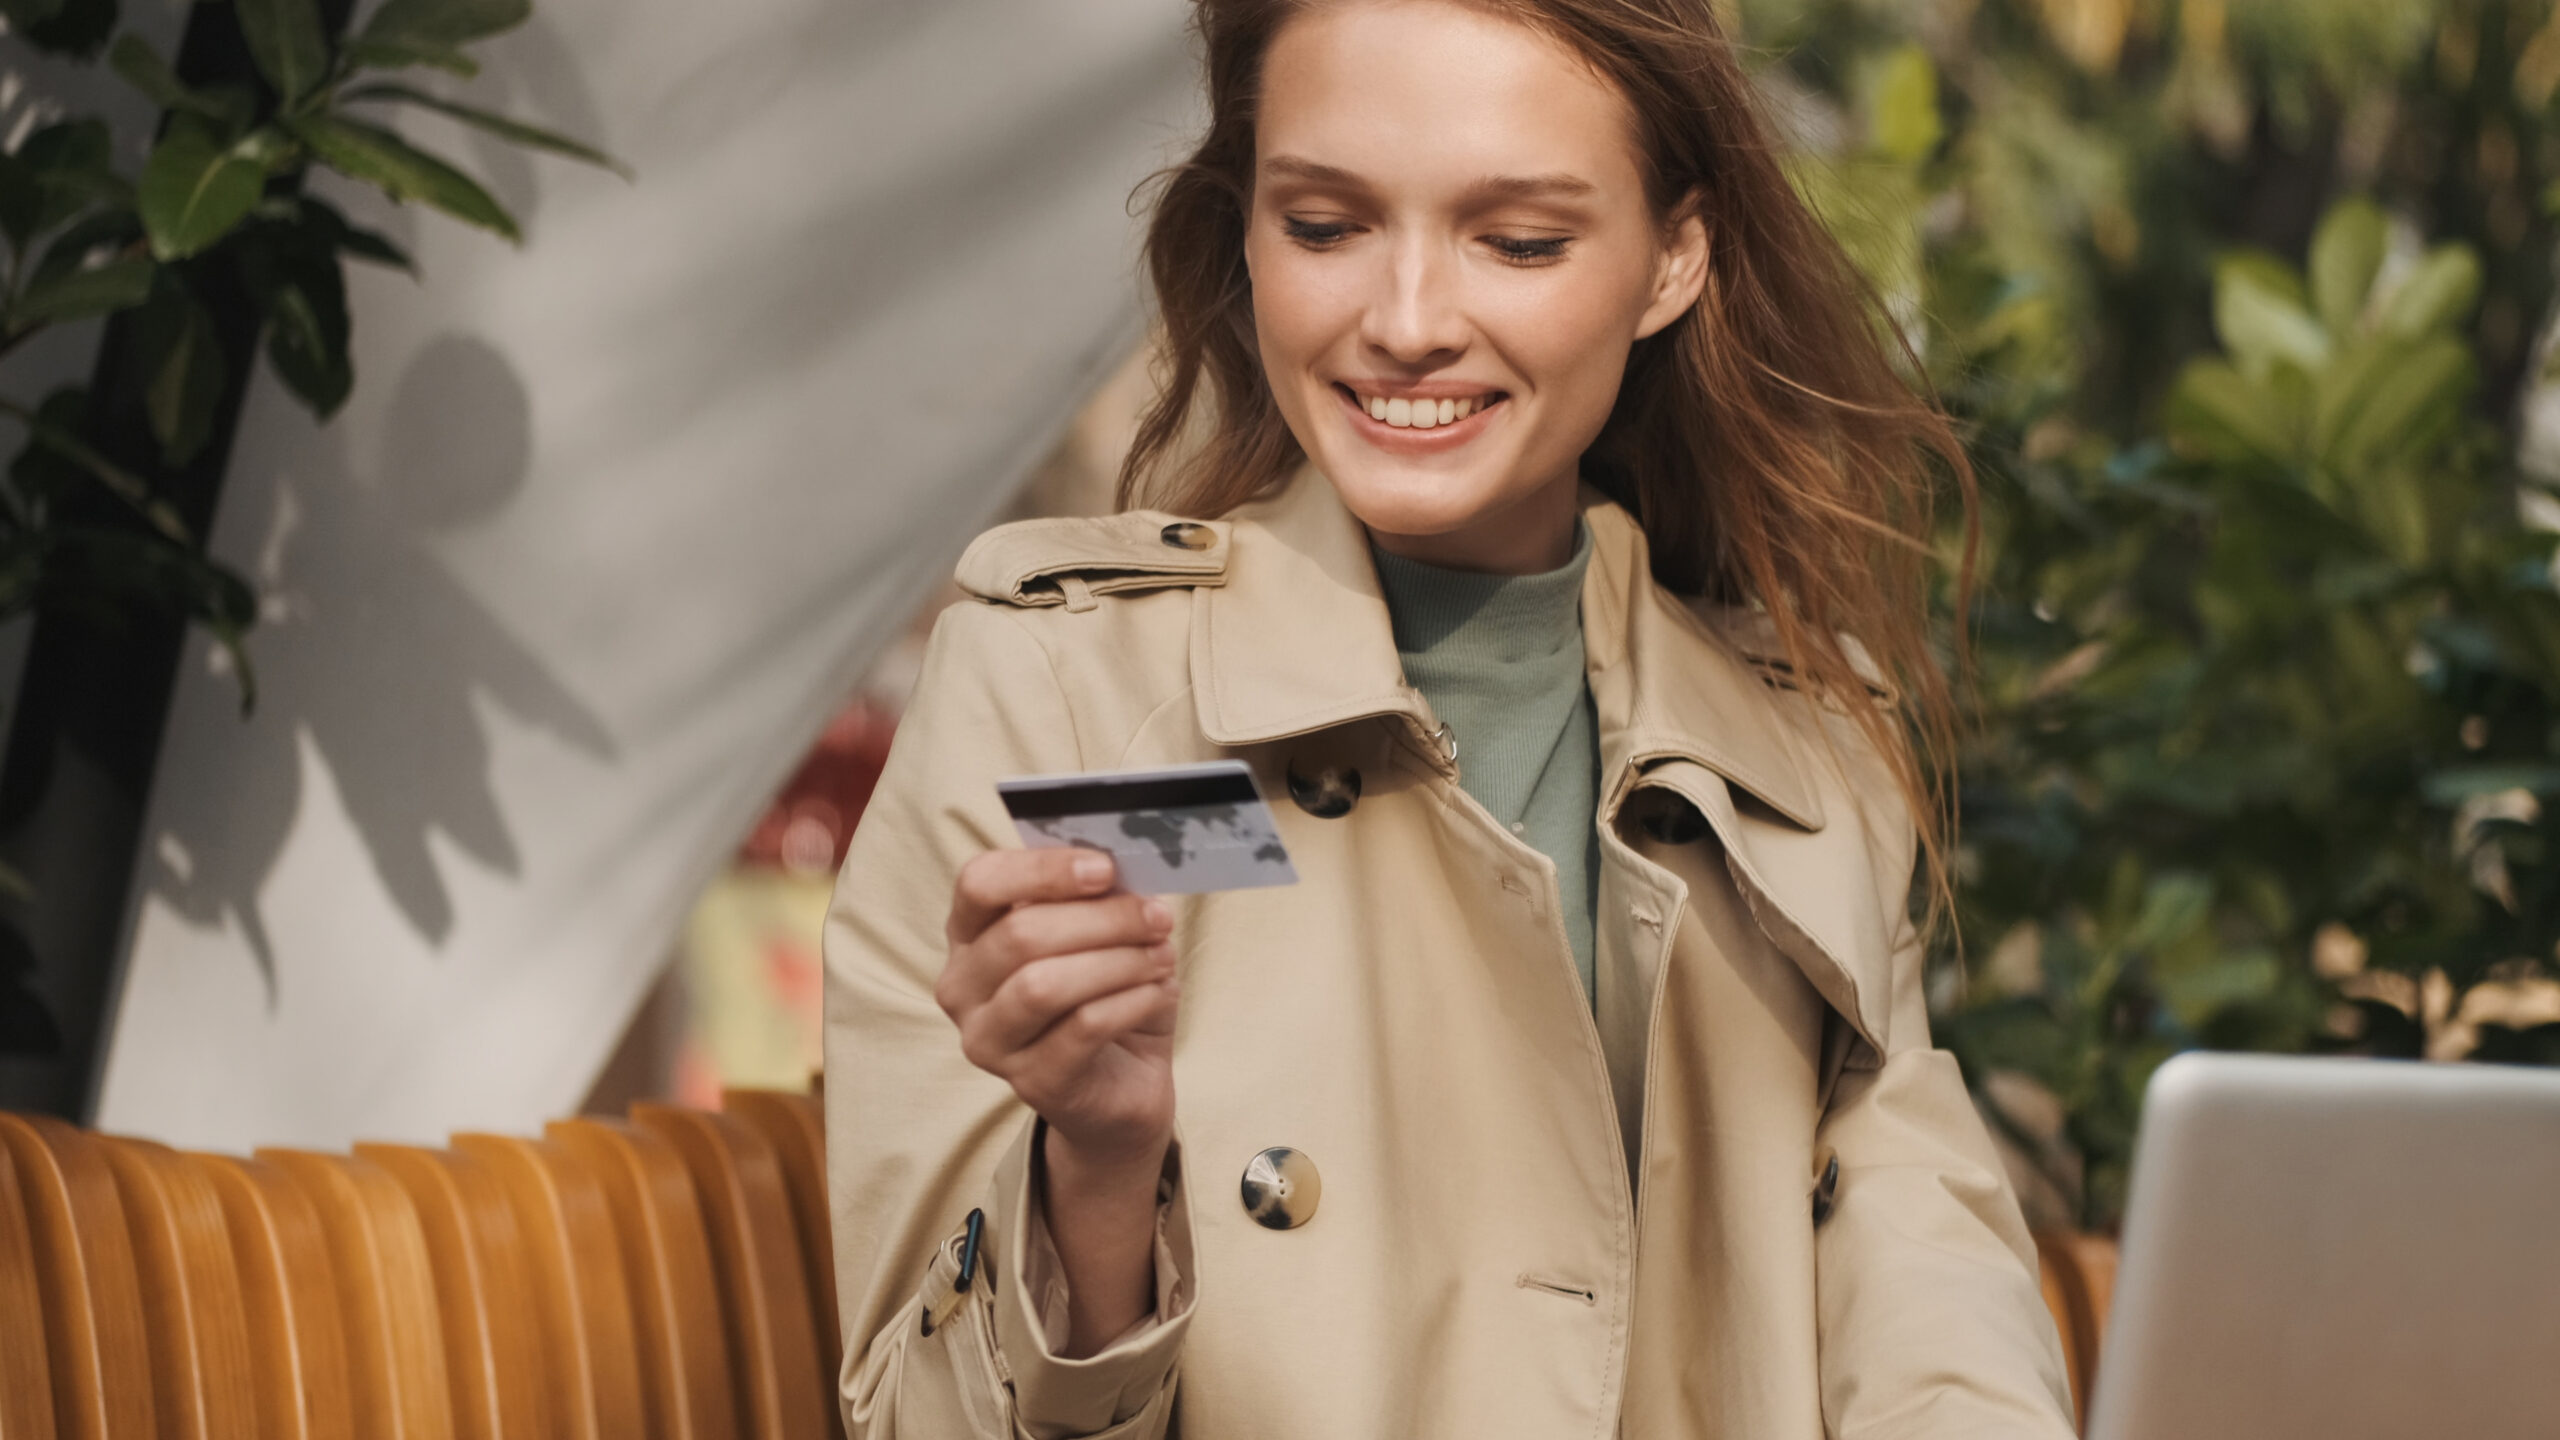 shaw credit card wells fargo financing payment plan